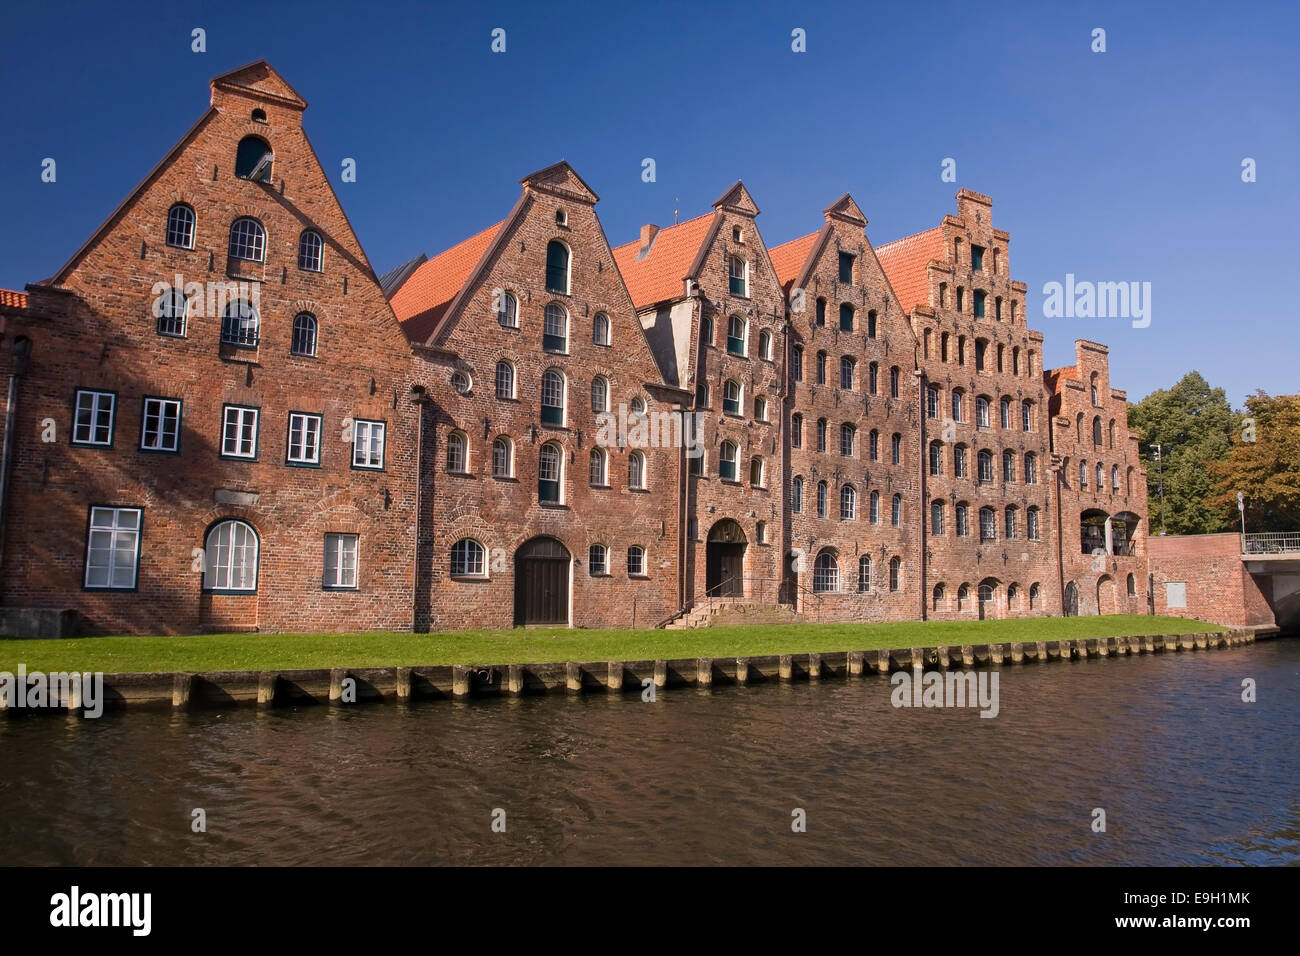 Salzspeicher, historic salt storage warehouses on the Upper Trave River in Luebeck, Lübeck, Schleswig-Holstein, Germany Stock Photo